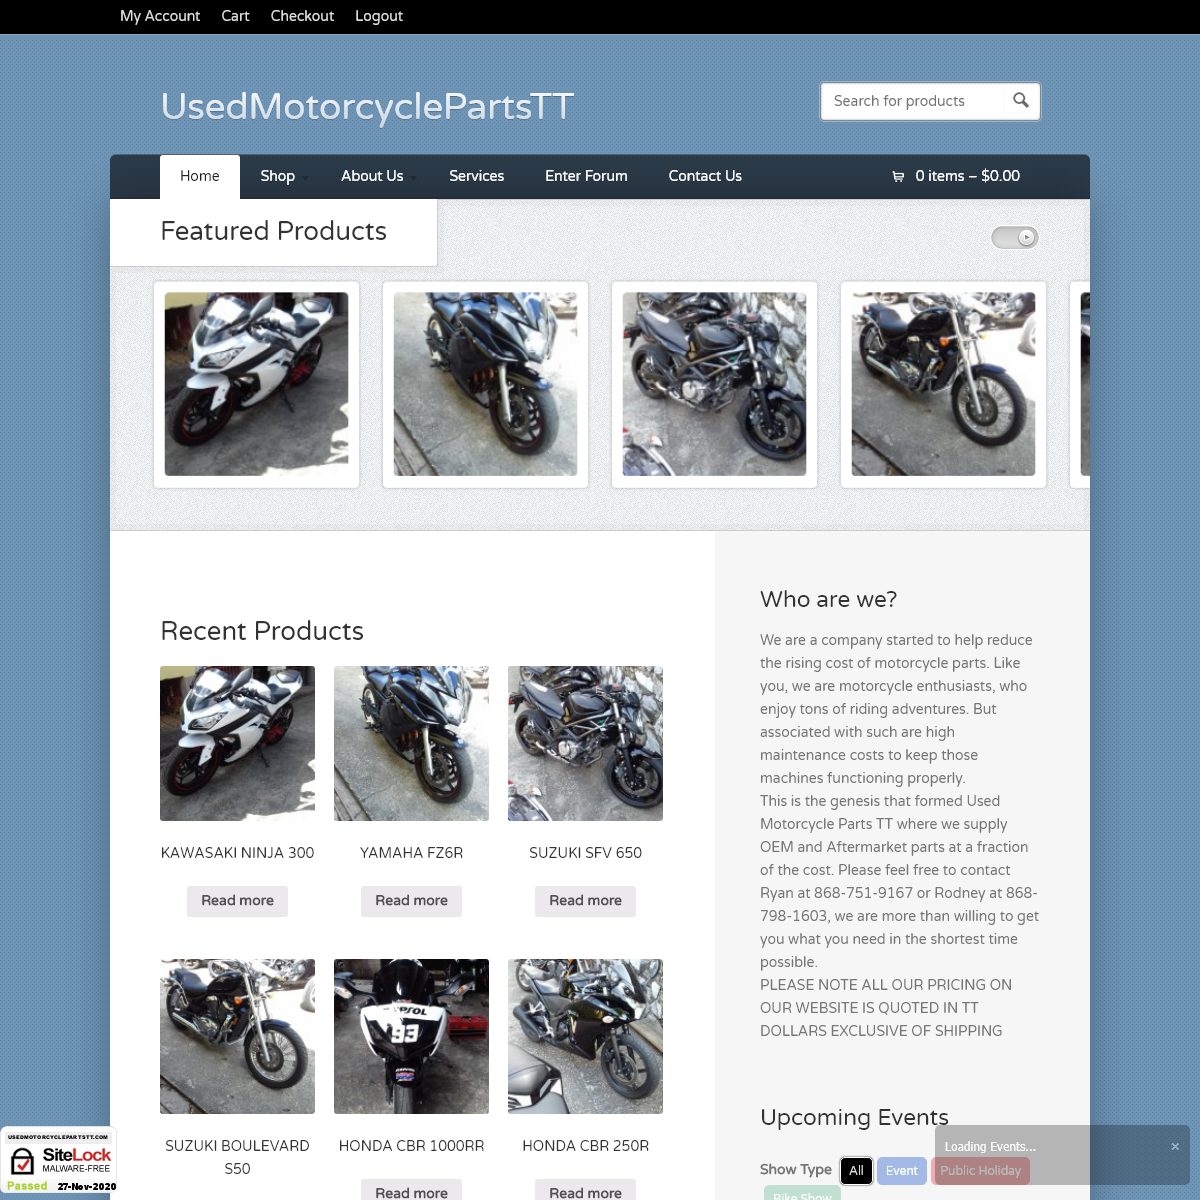 A complete backup of usedmotorcyclepartstt.com